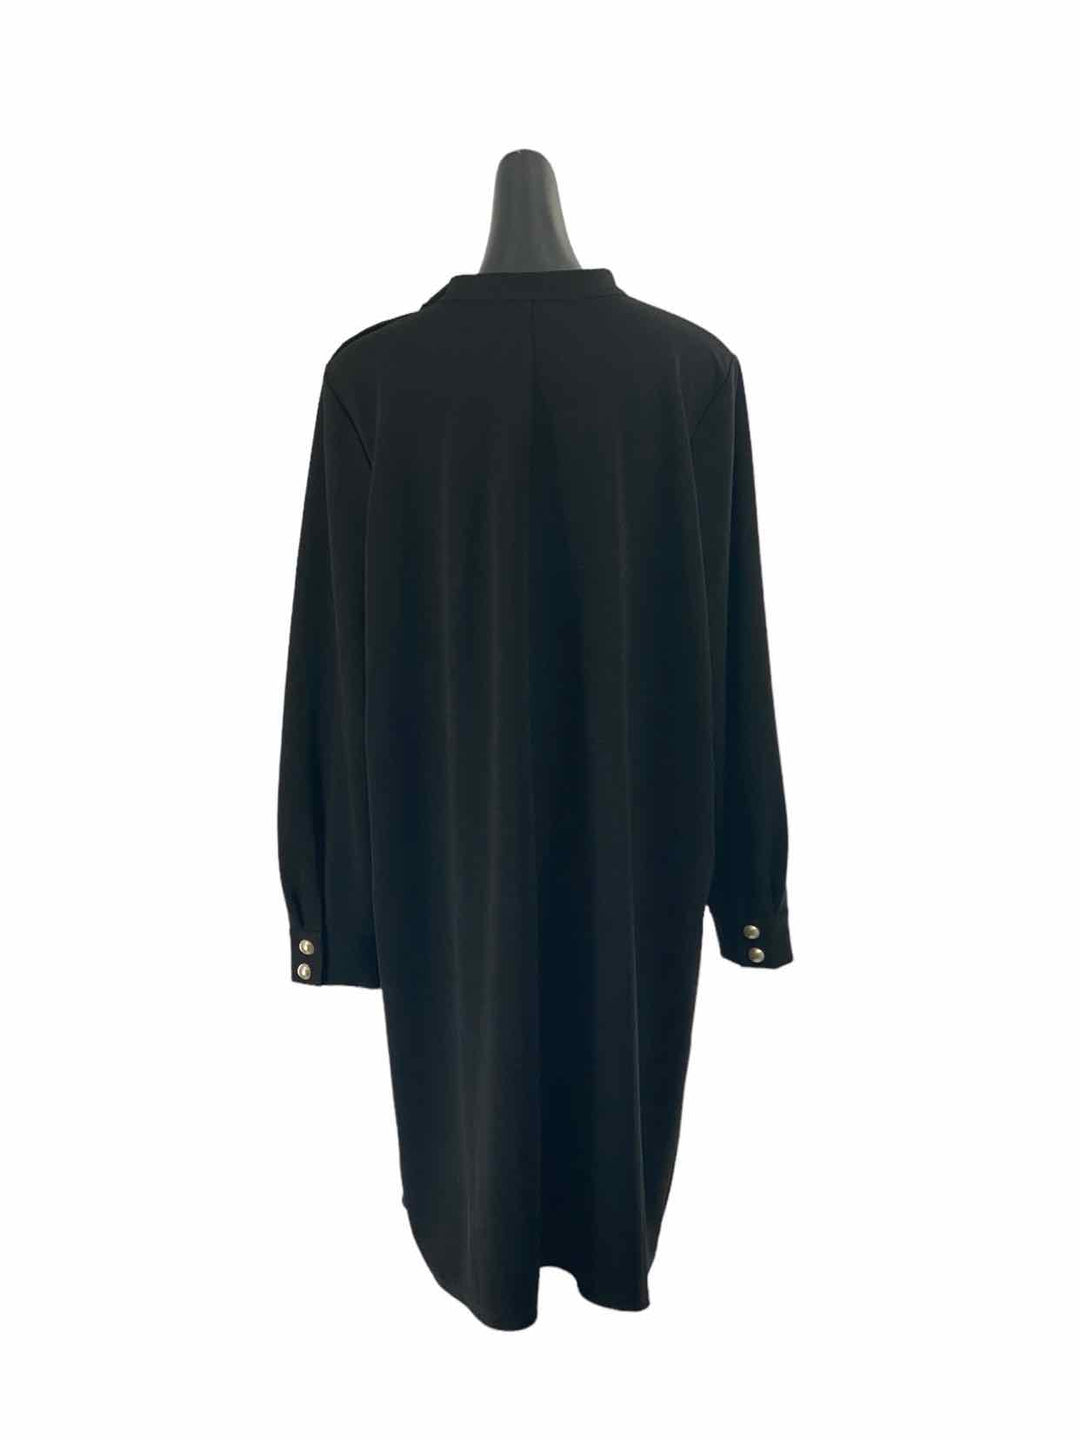 Eloquii Size 22 Black Dress